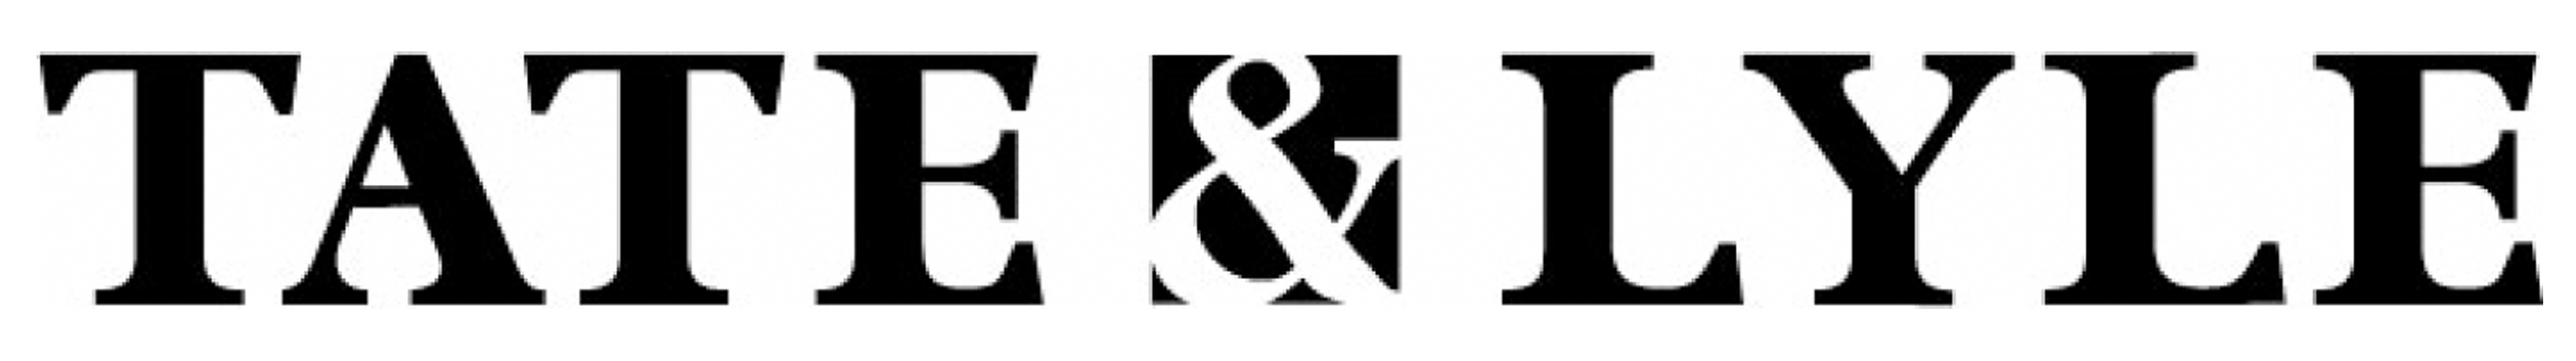 Tate & Lyle Brand Logo